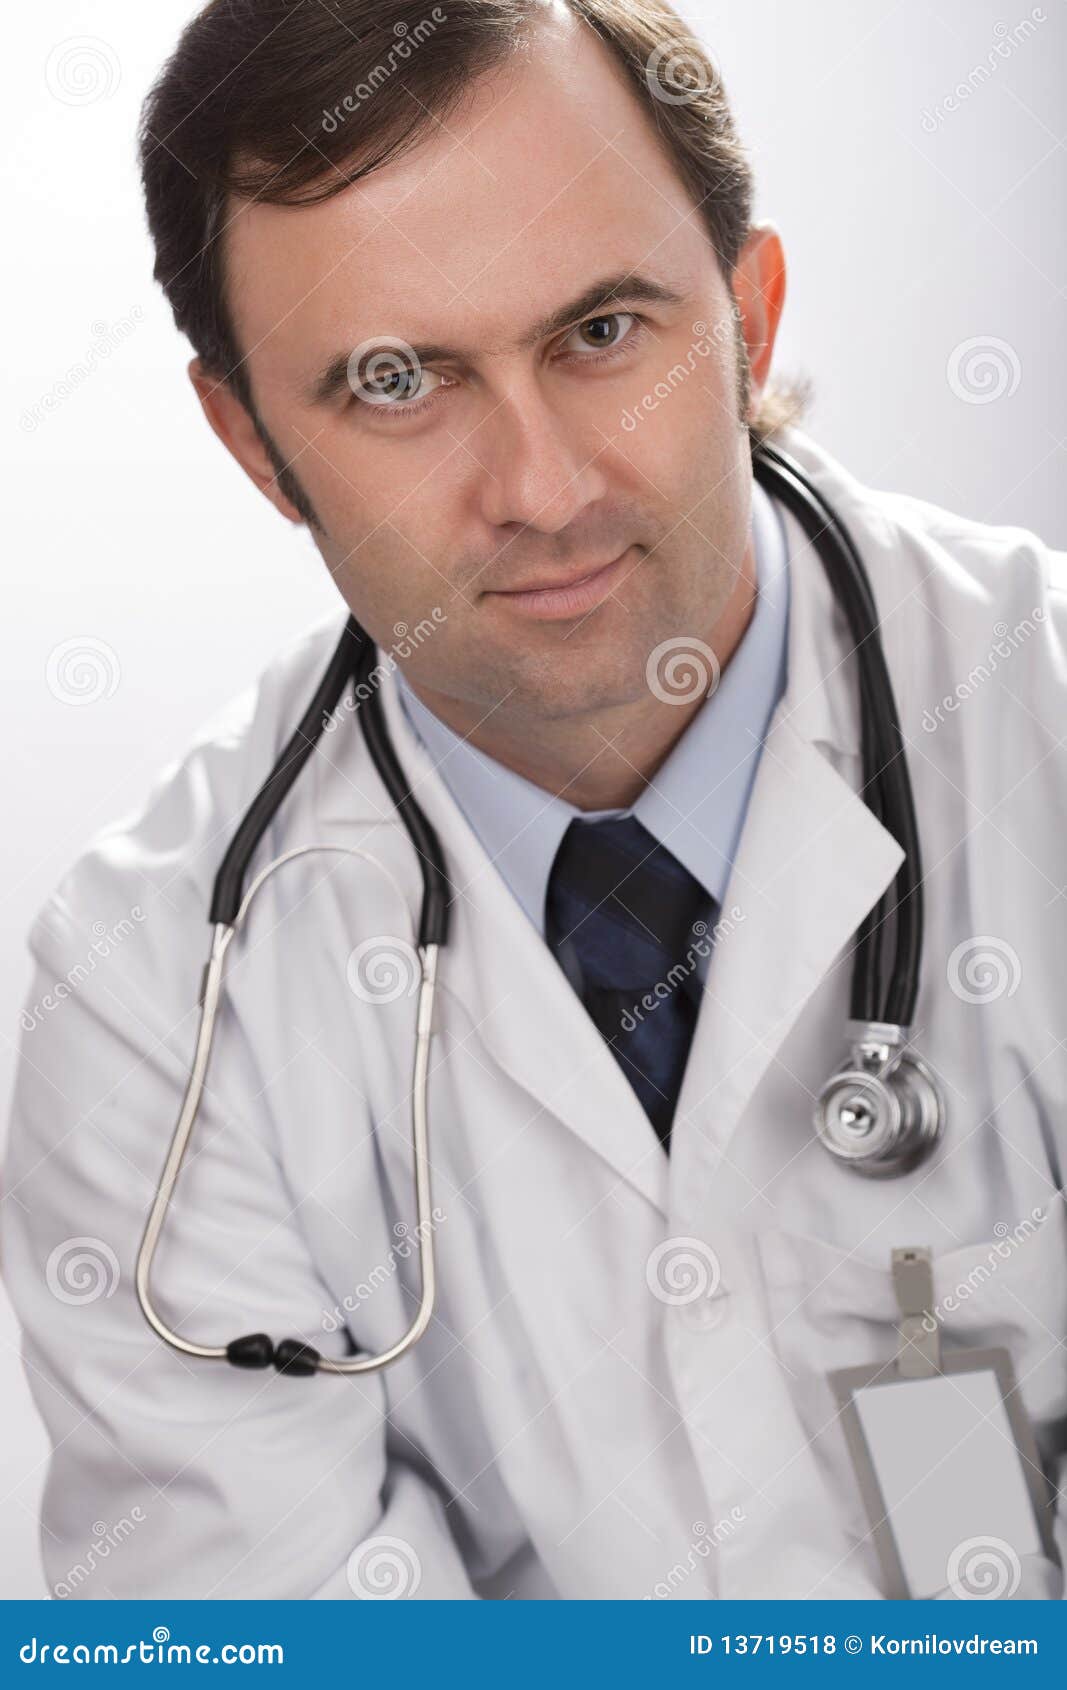 trustworthy handsome doctor